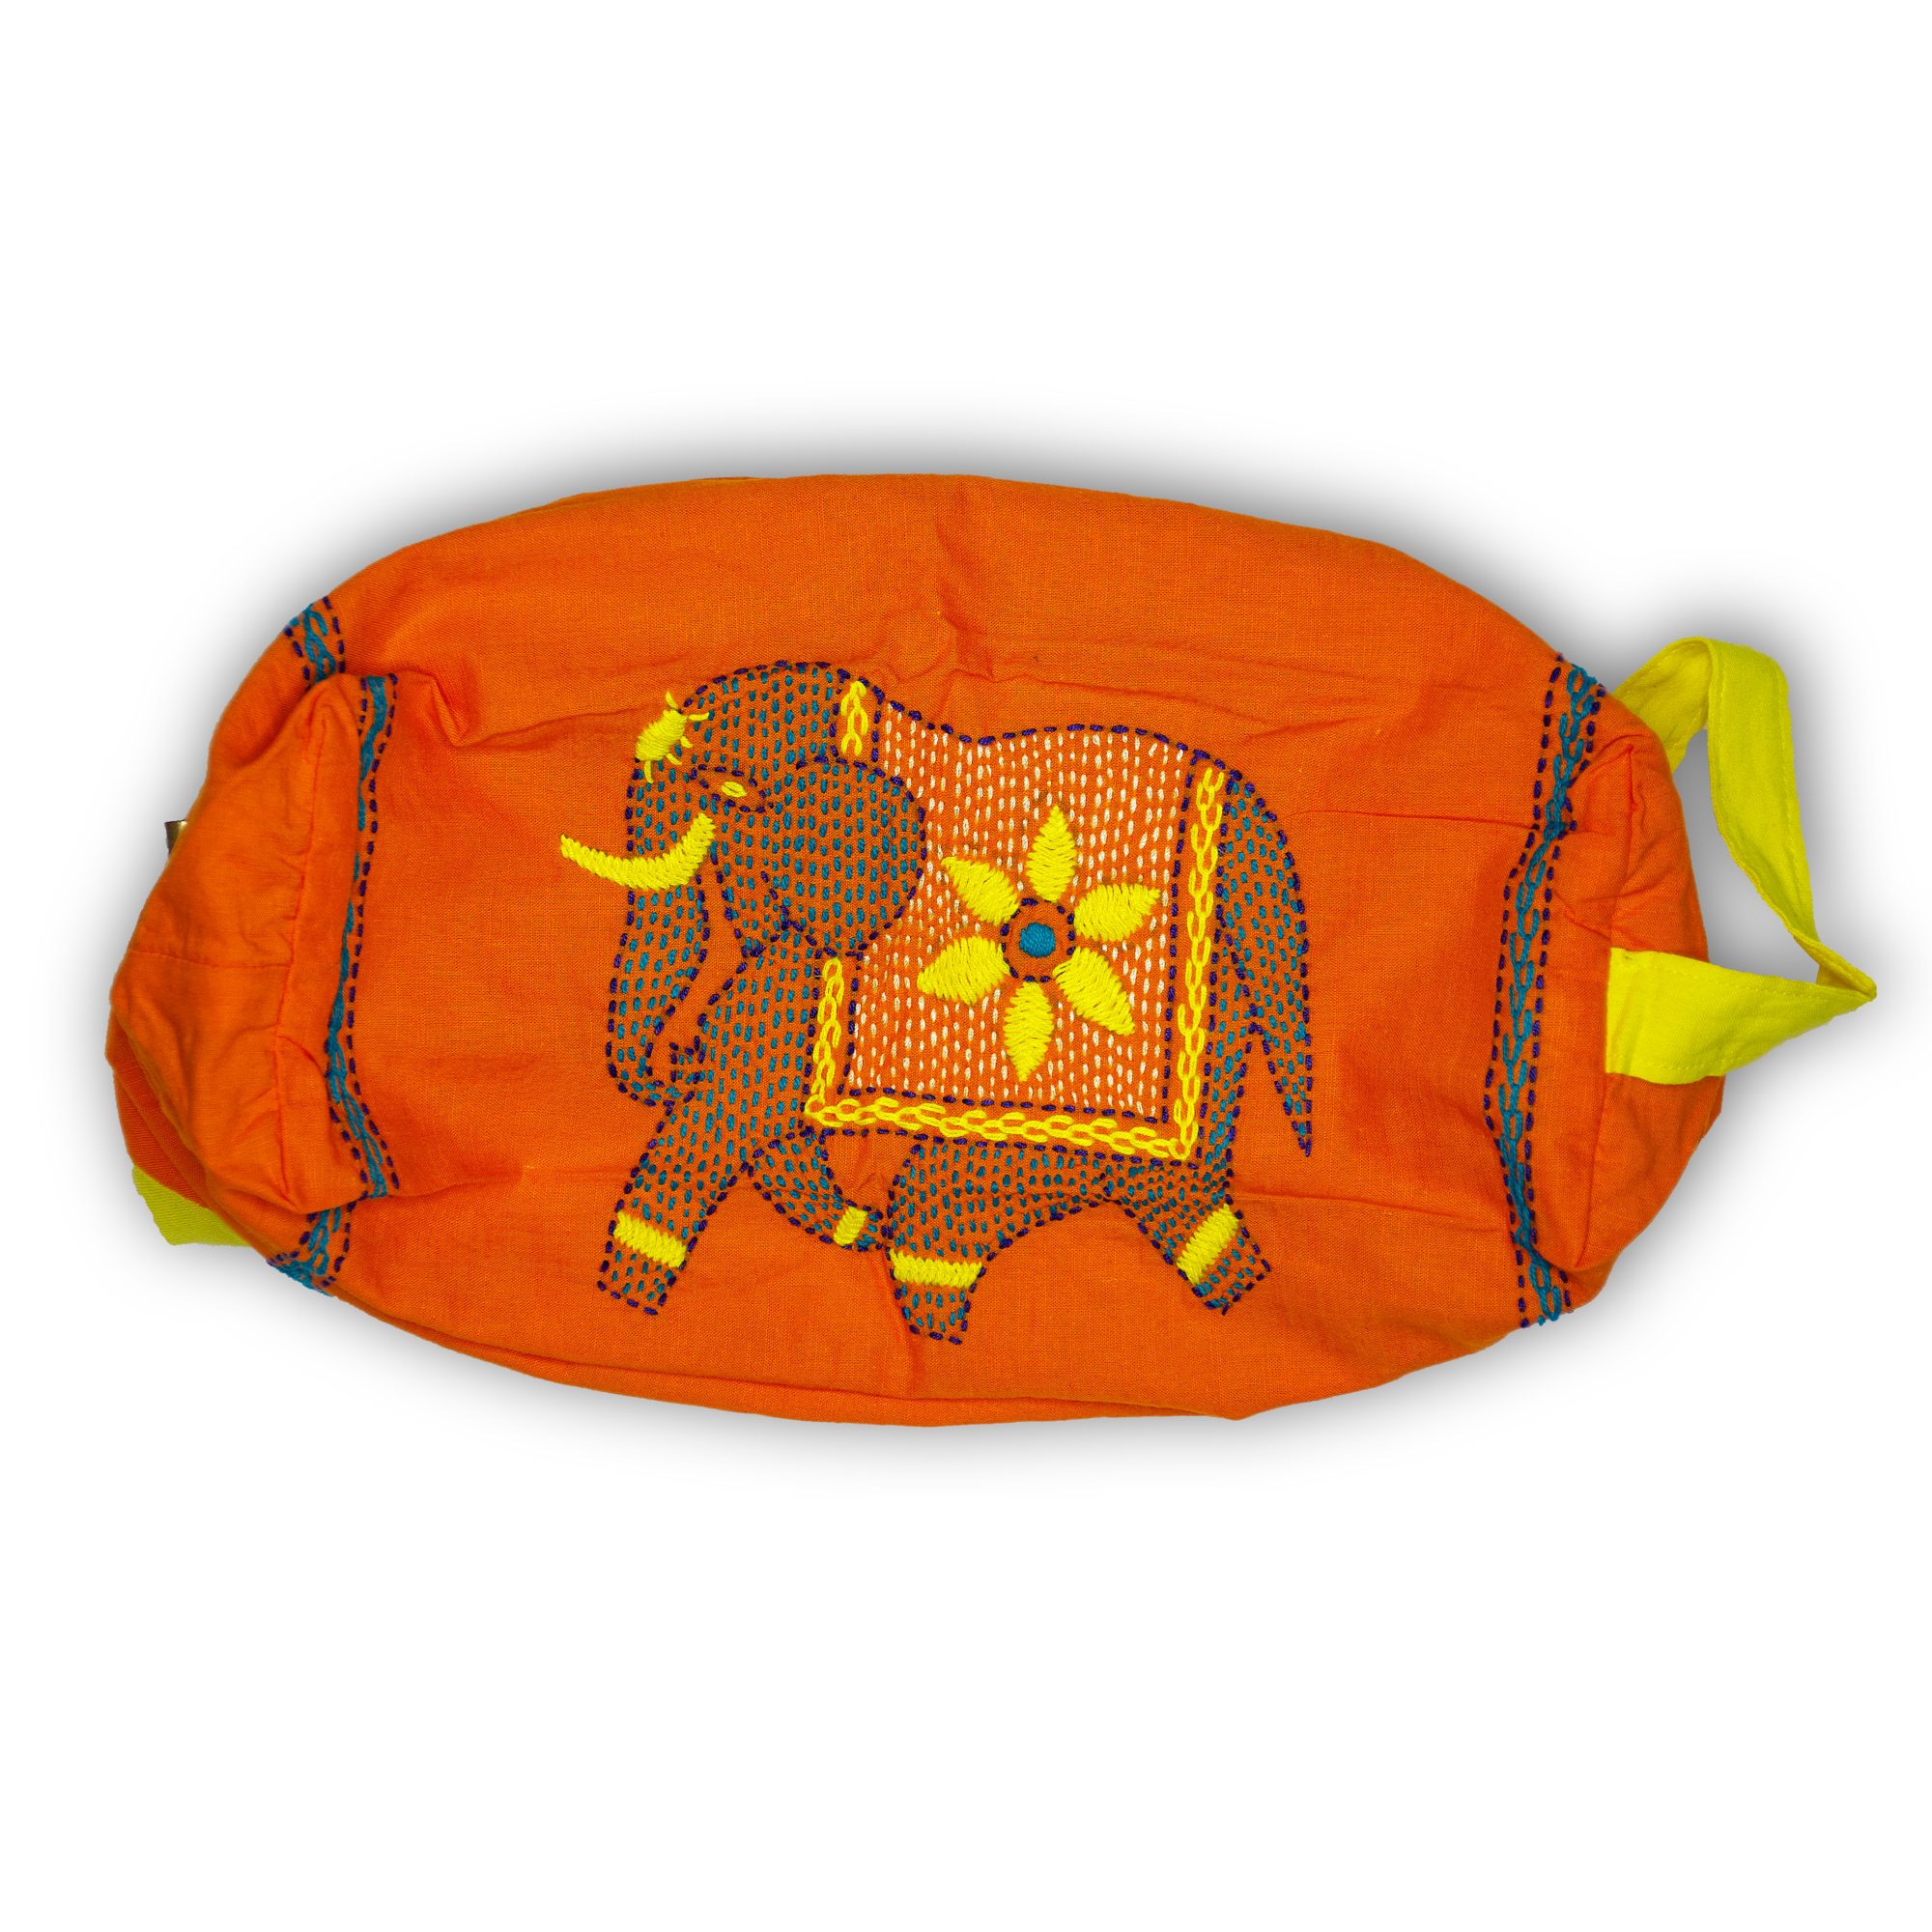 Pouch Bags - Dinajpur (elephant) Design - Asif (Orange) / Asha (Yellow)